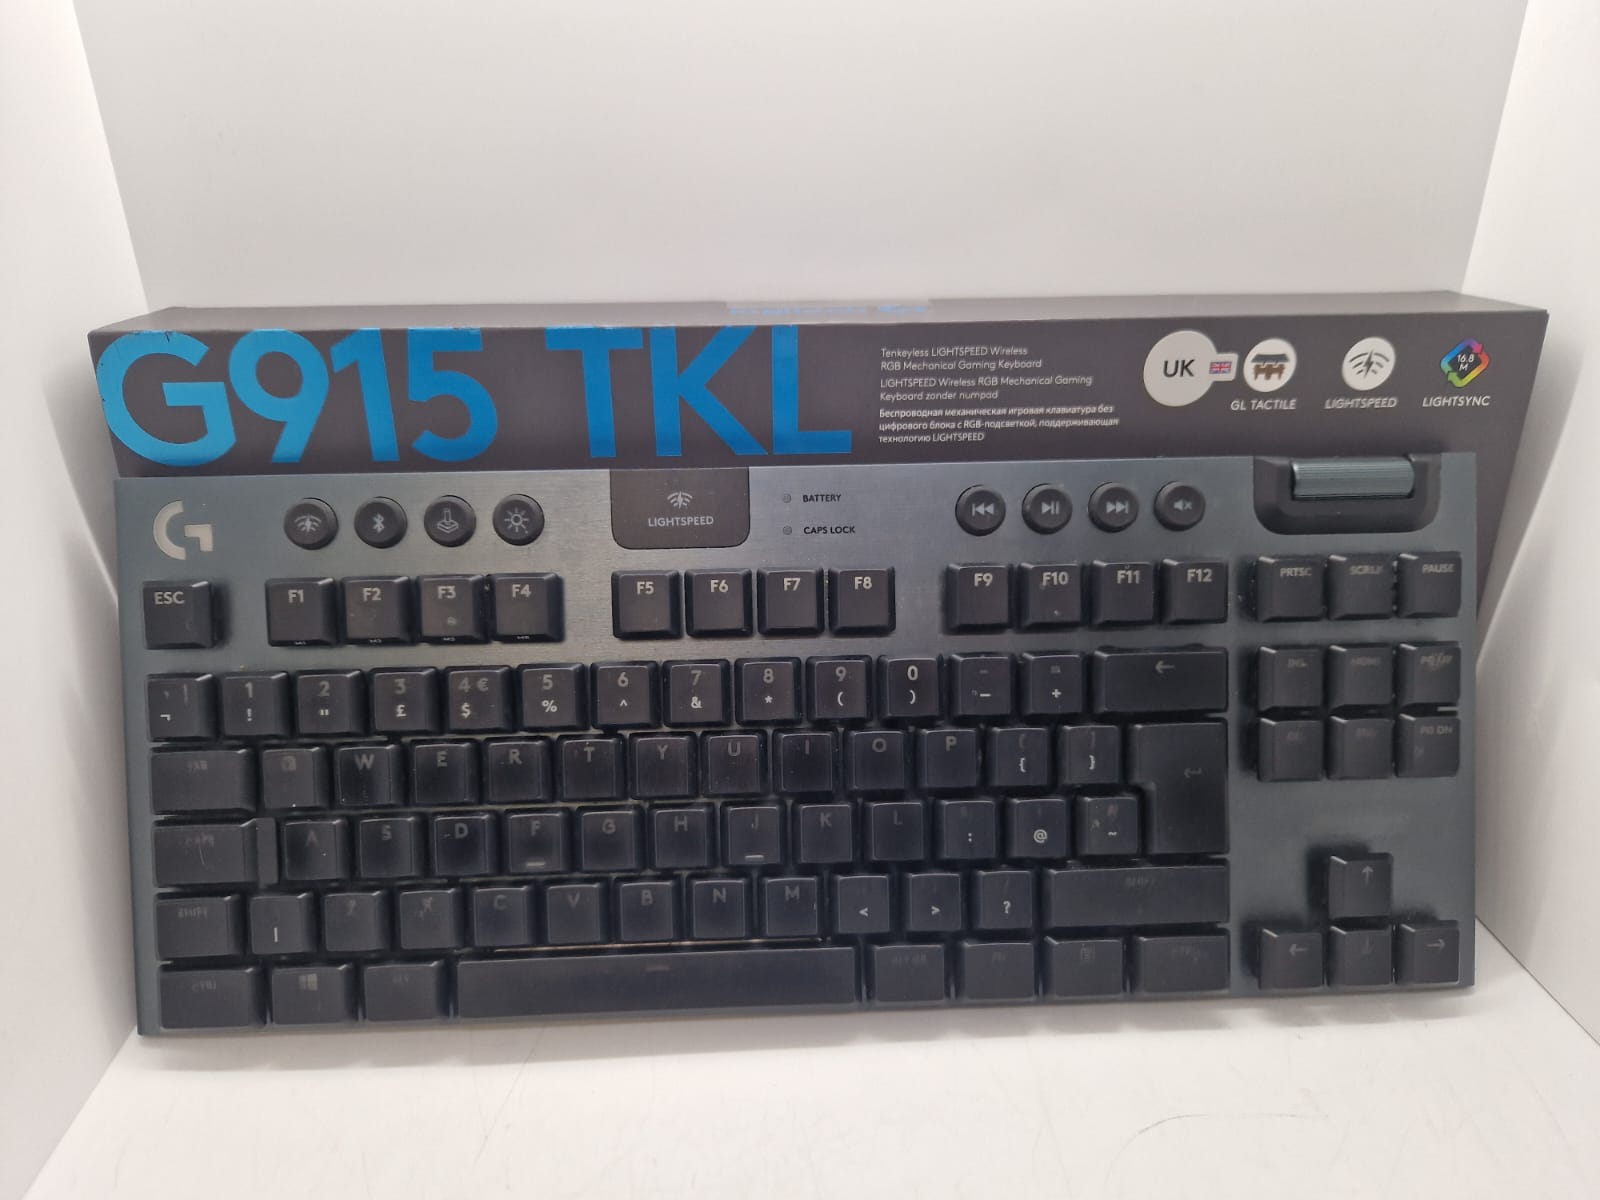 Logitech G915 Wireless RGB Tactical Gaming Keyboard - Black